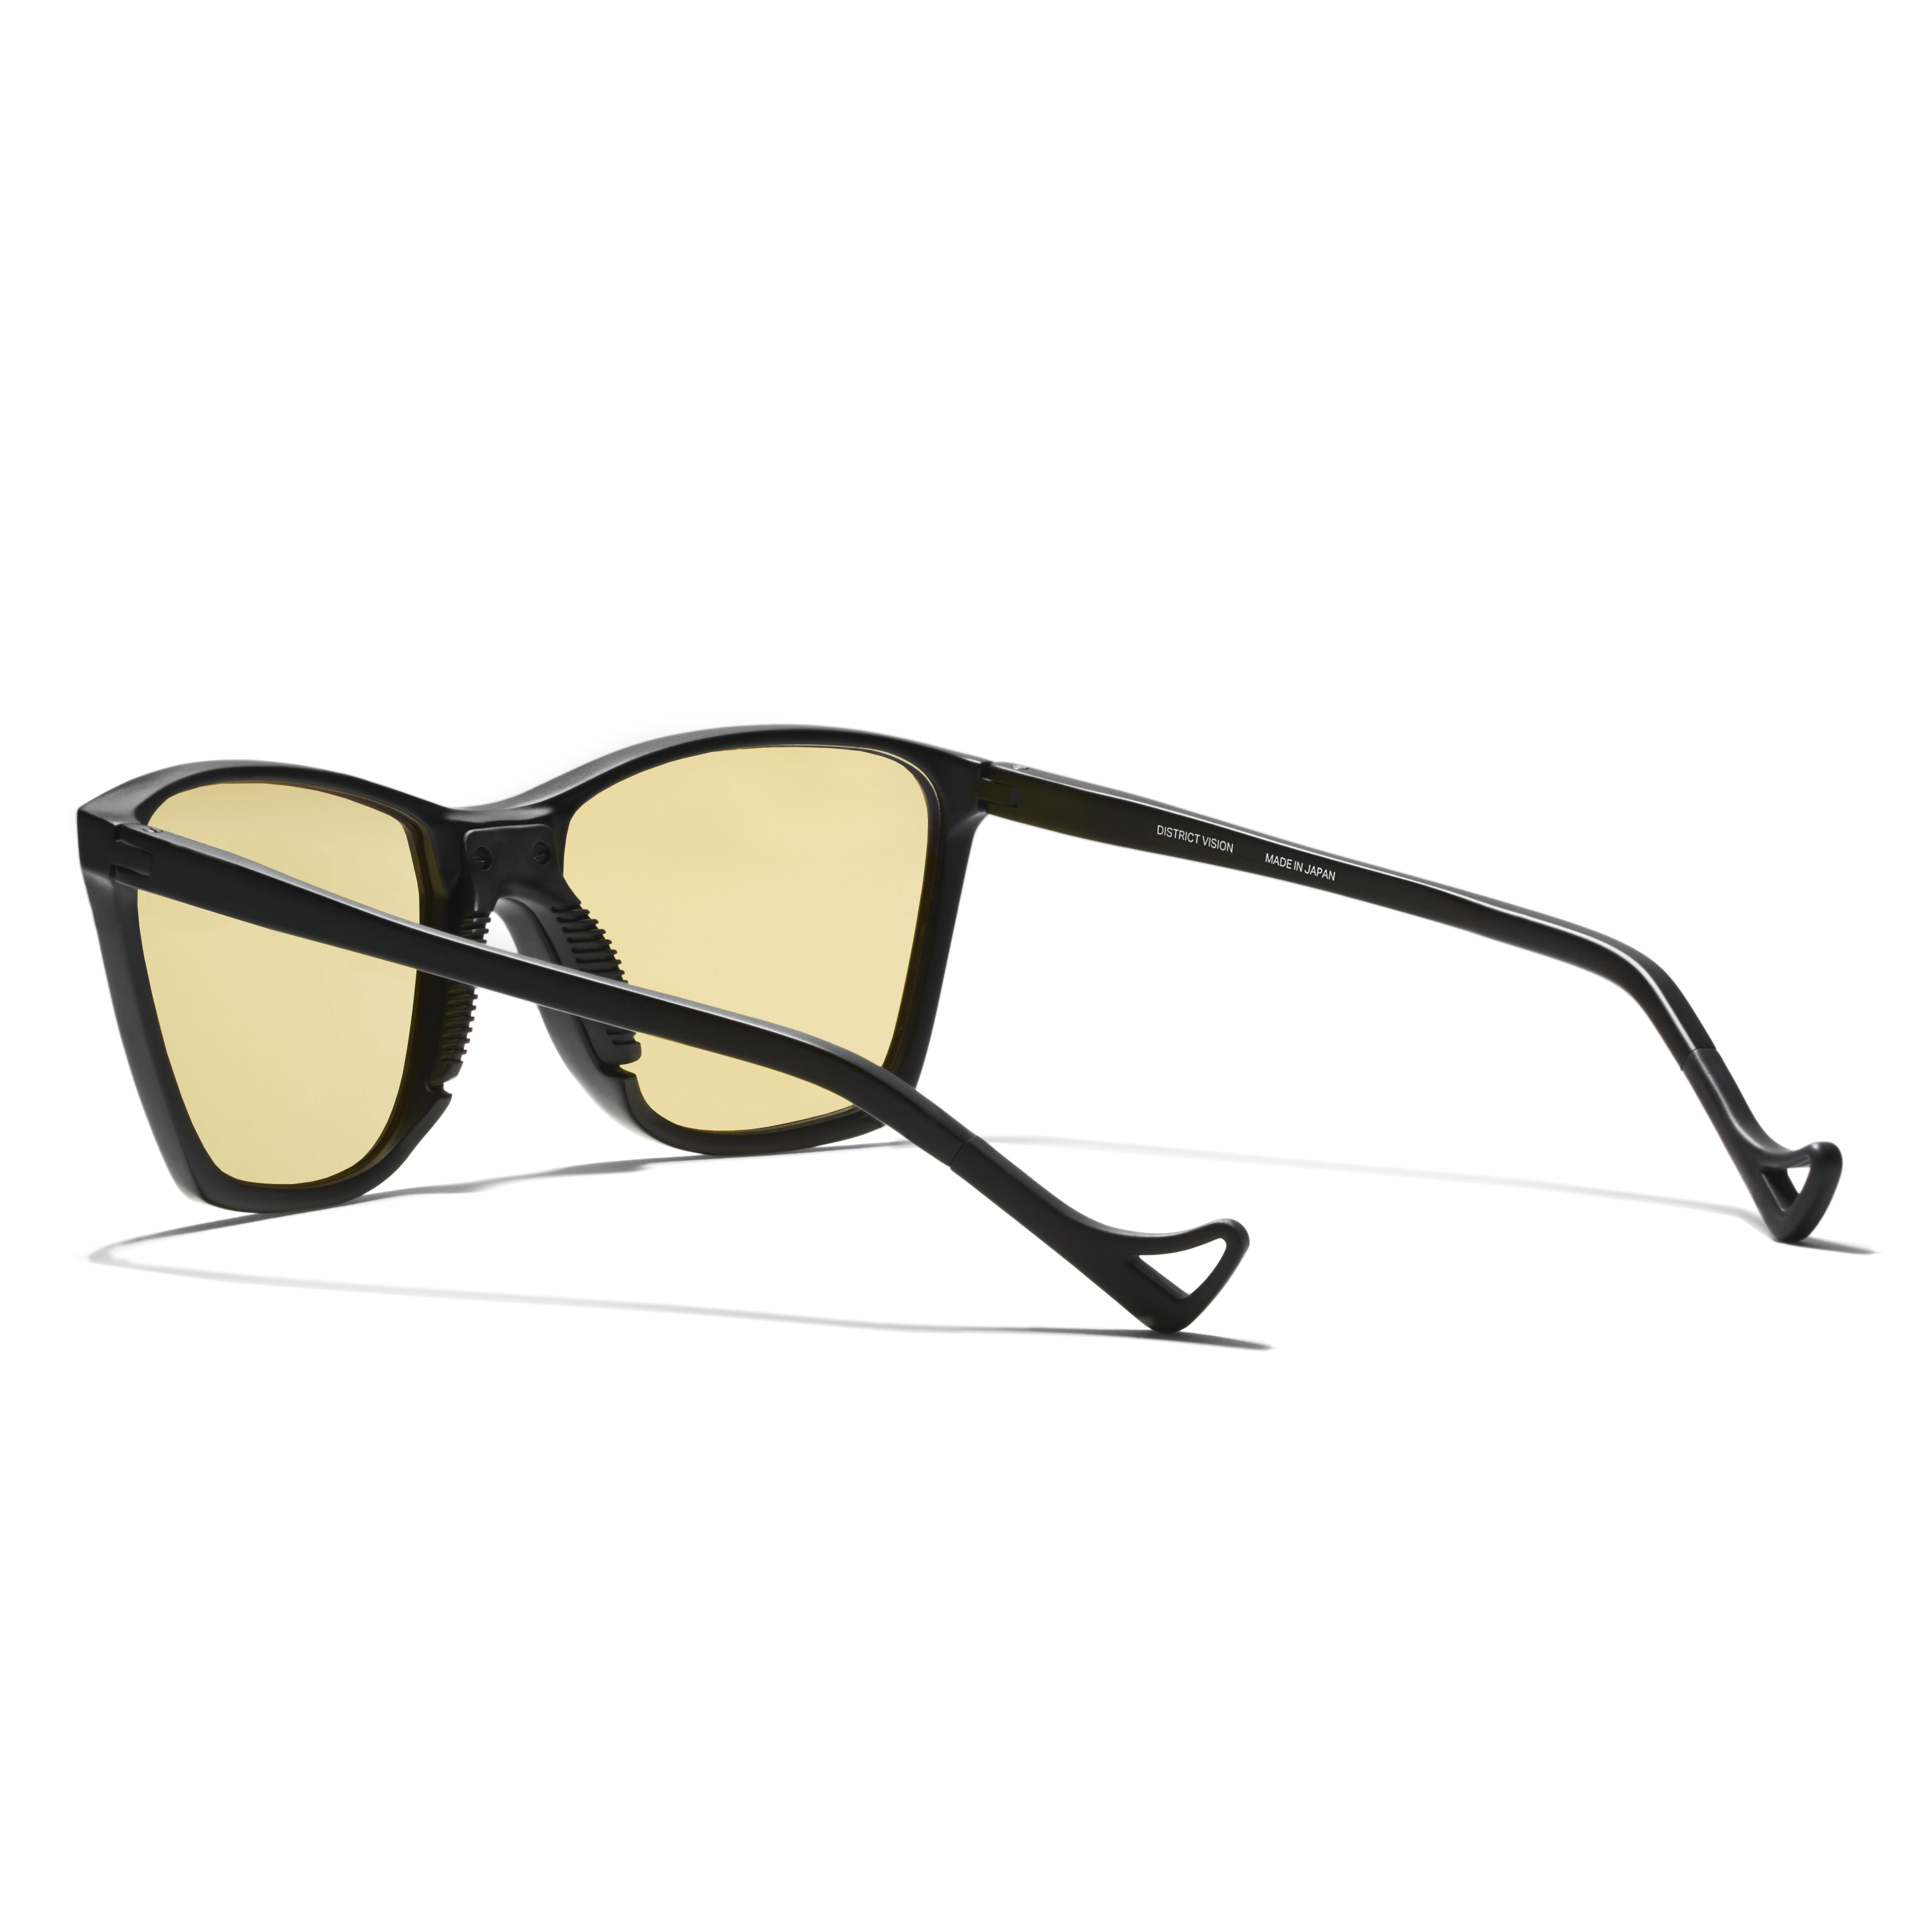 District Vision Keiichi Standard - Running Sunglasses - Black 